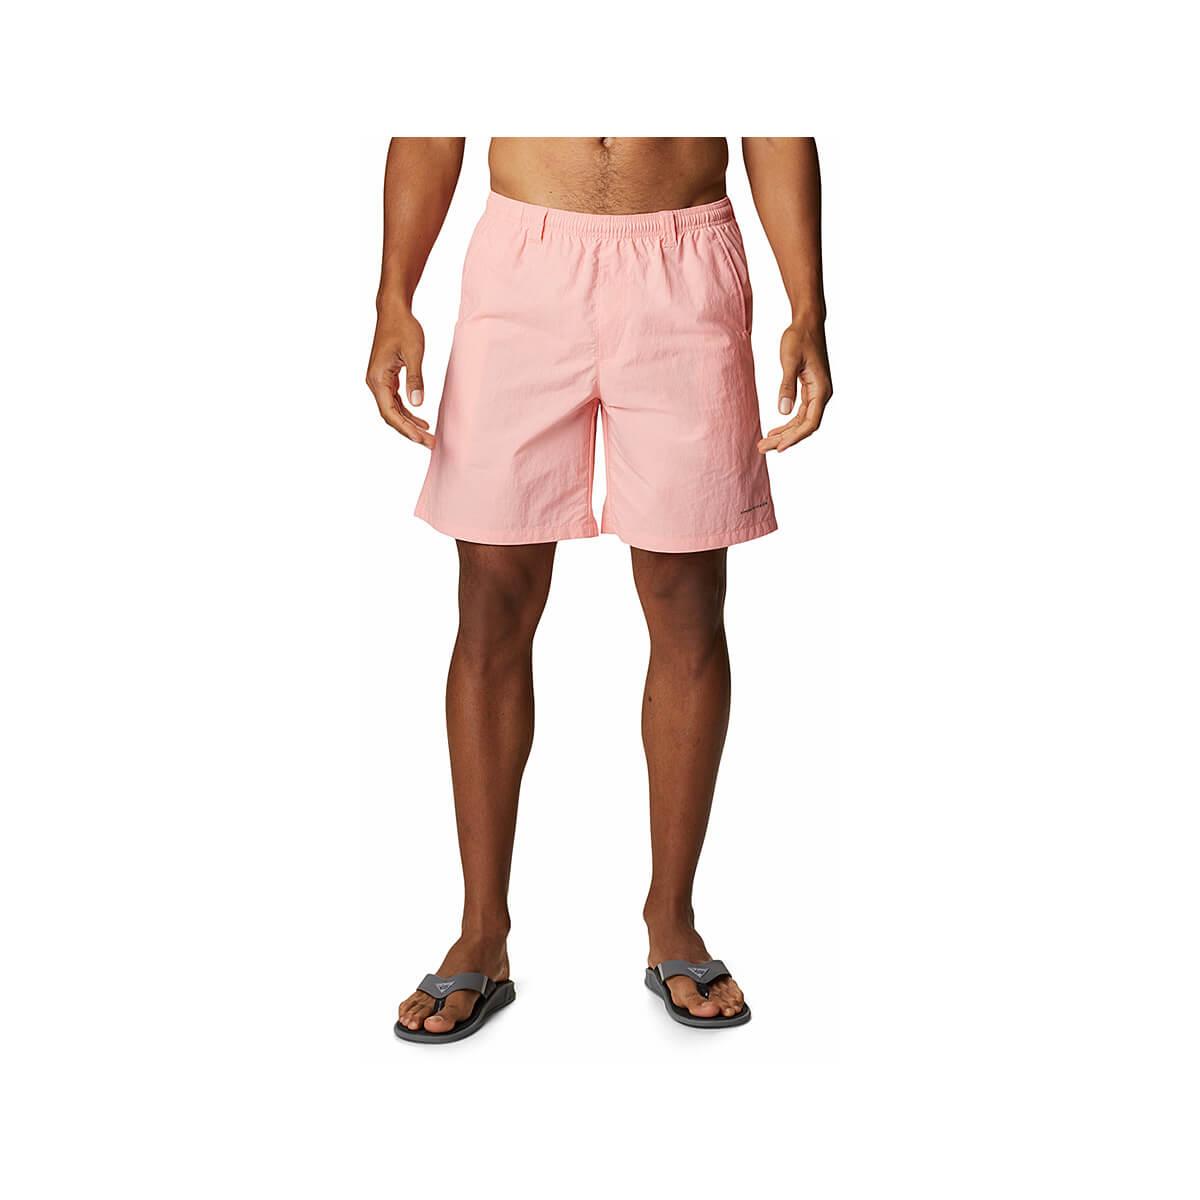  Men's Pfg Backcast Iii Water Shorts